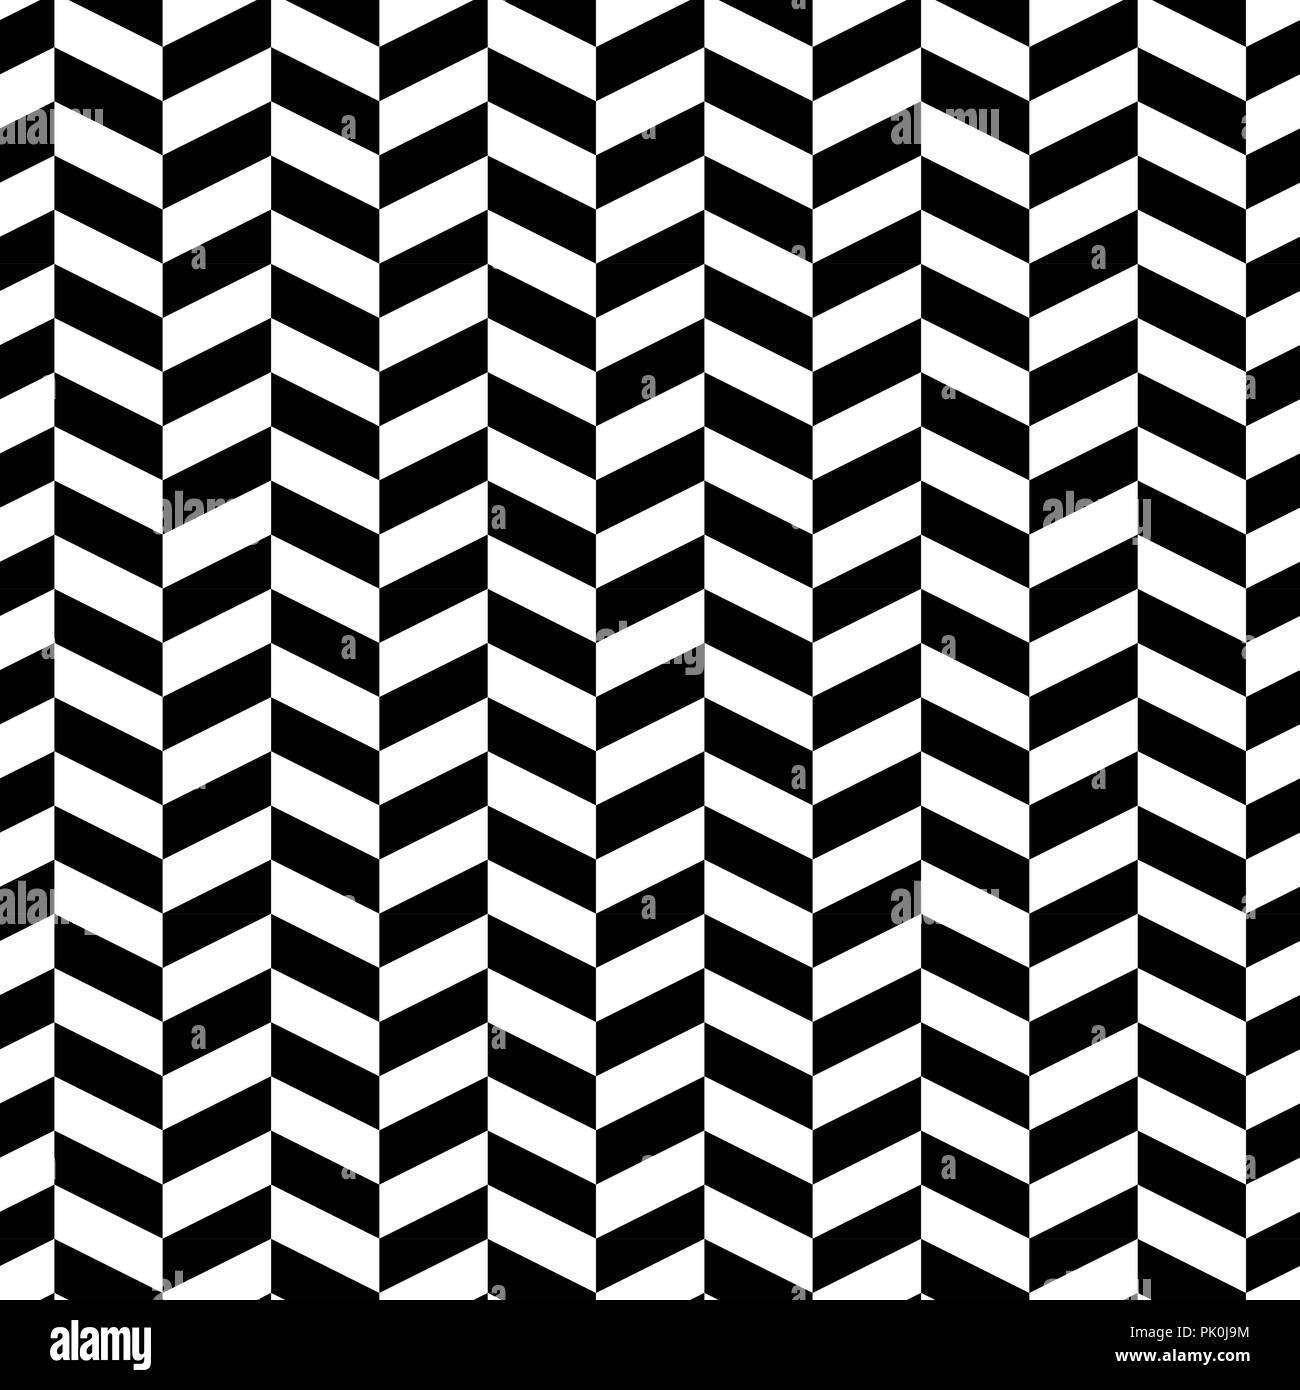 Herringbone tile Black and White Stock Photos & Images - Alamy